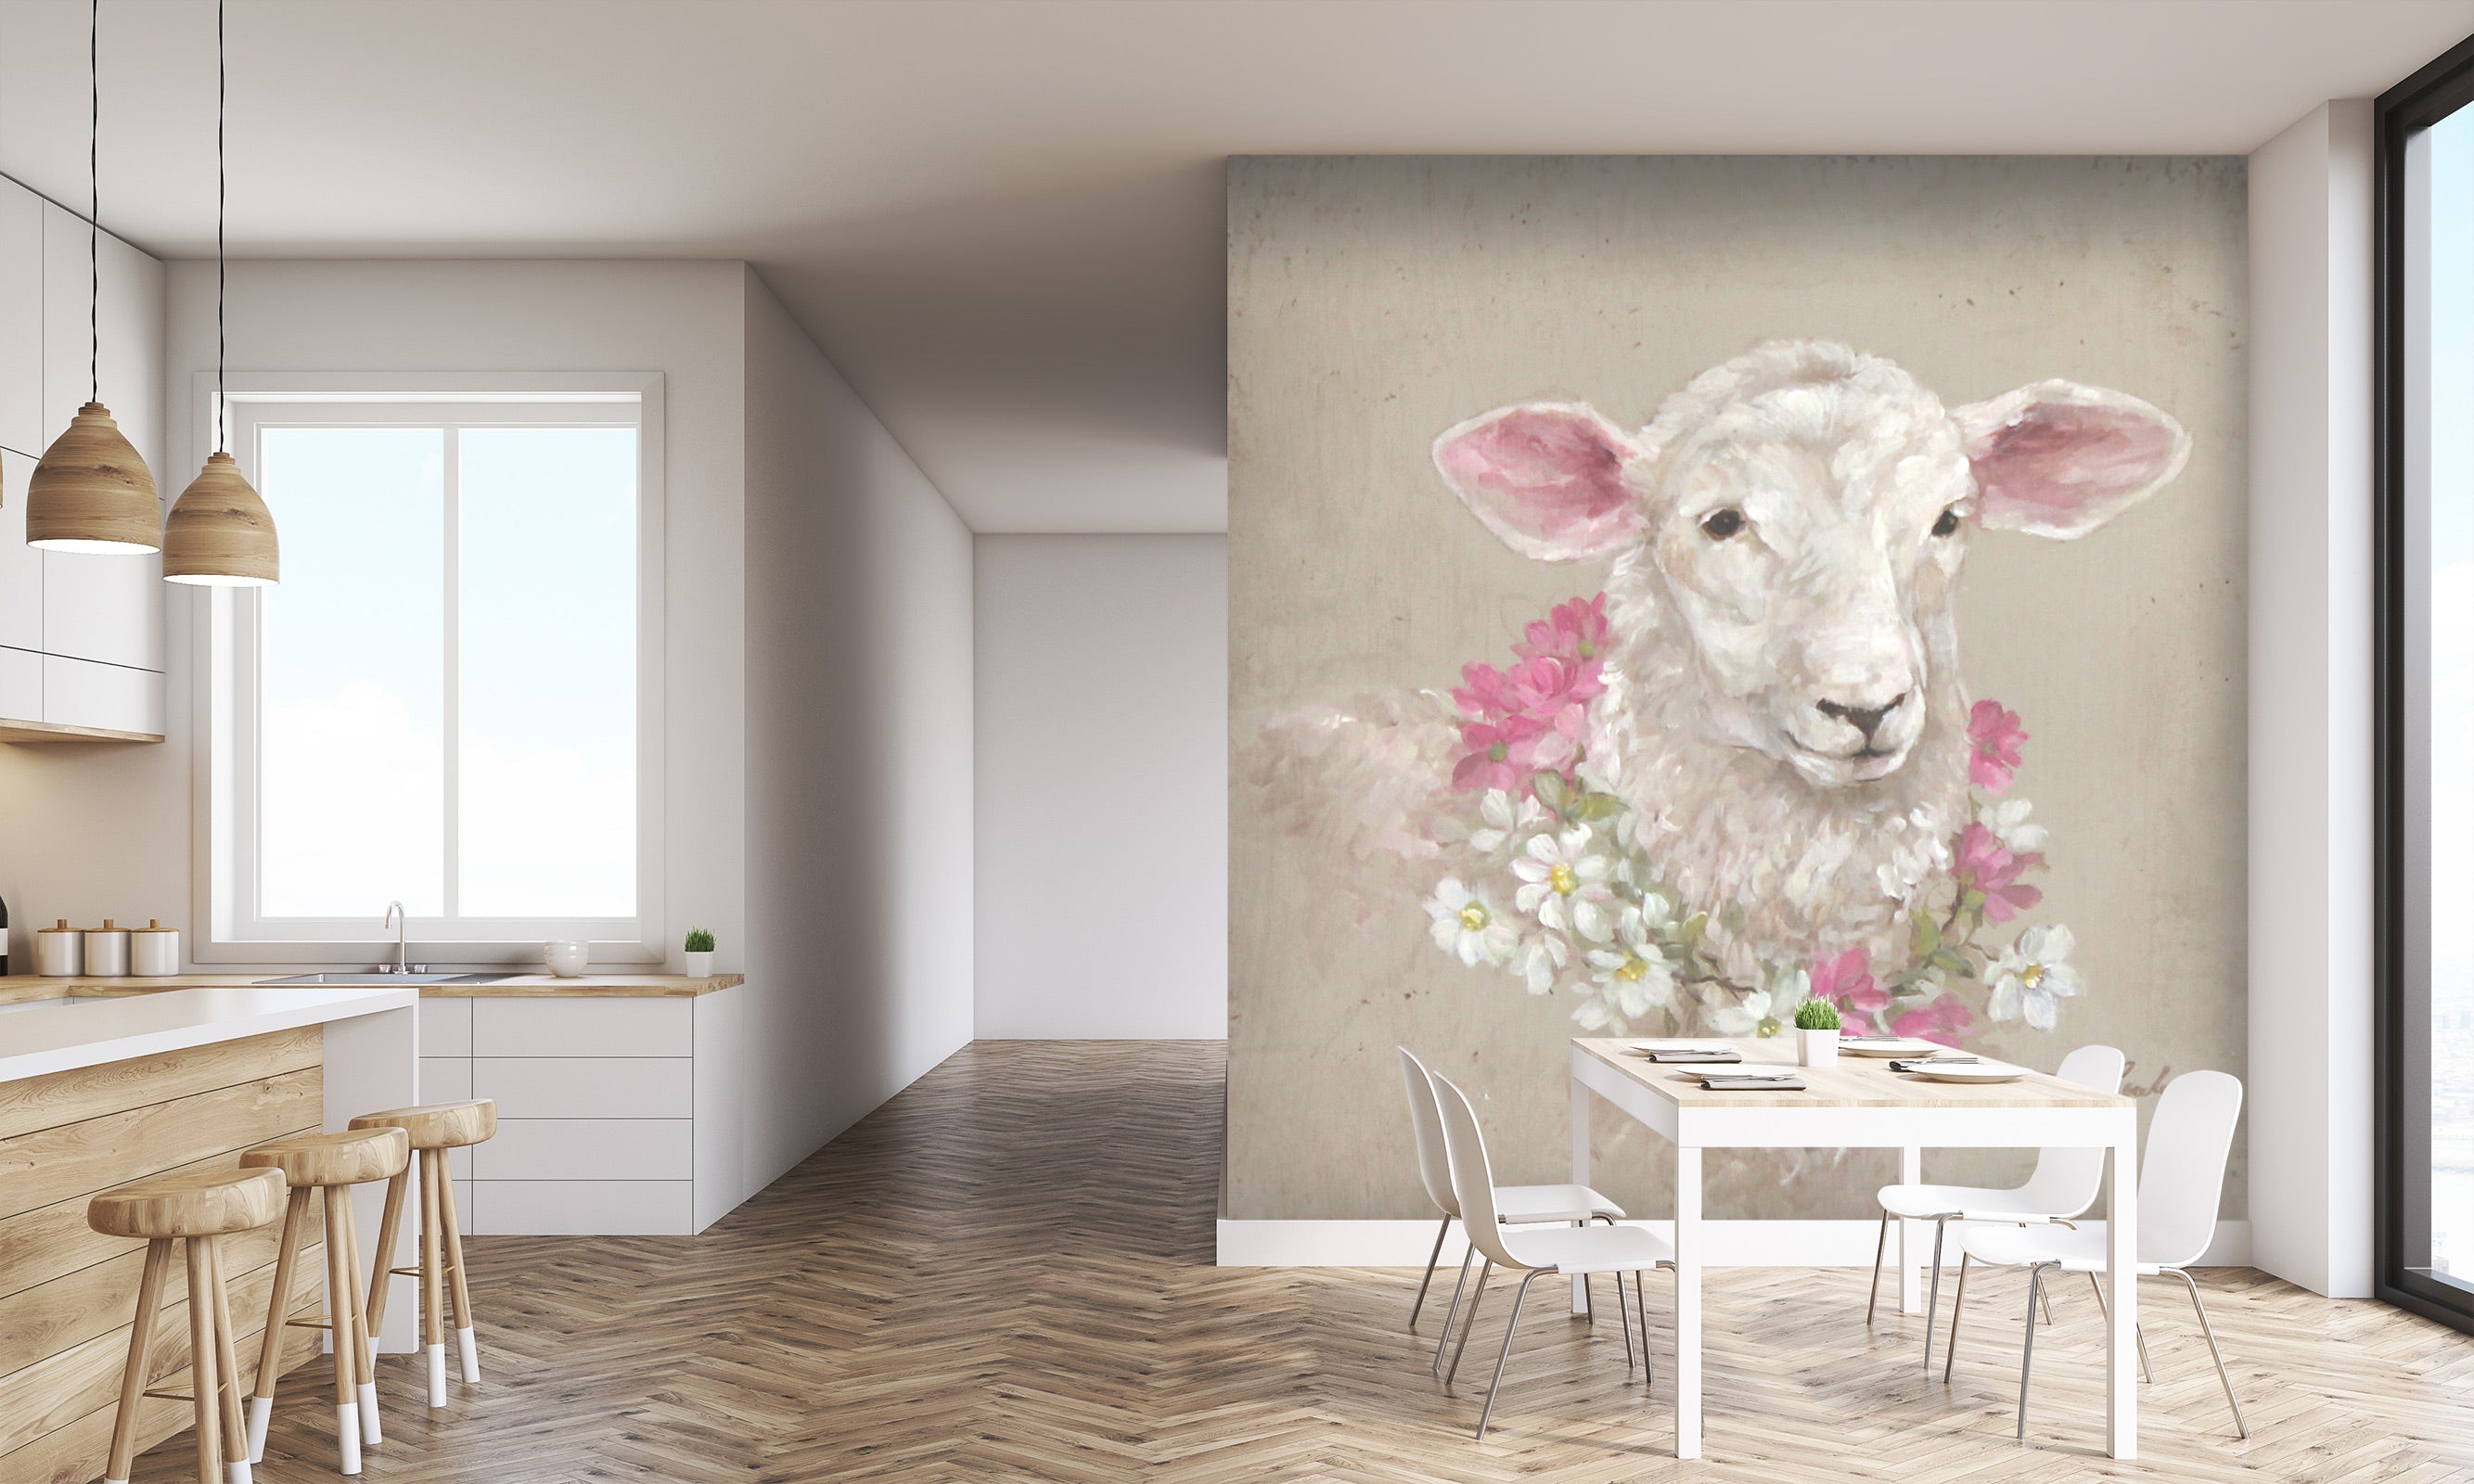 3D Wreath Sheep 3193 Debi Coules Wall Mural Wall Murals